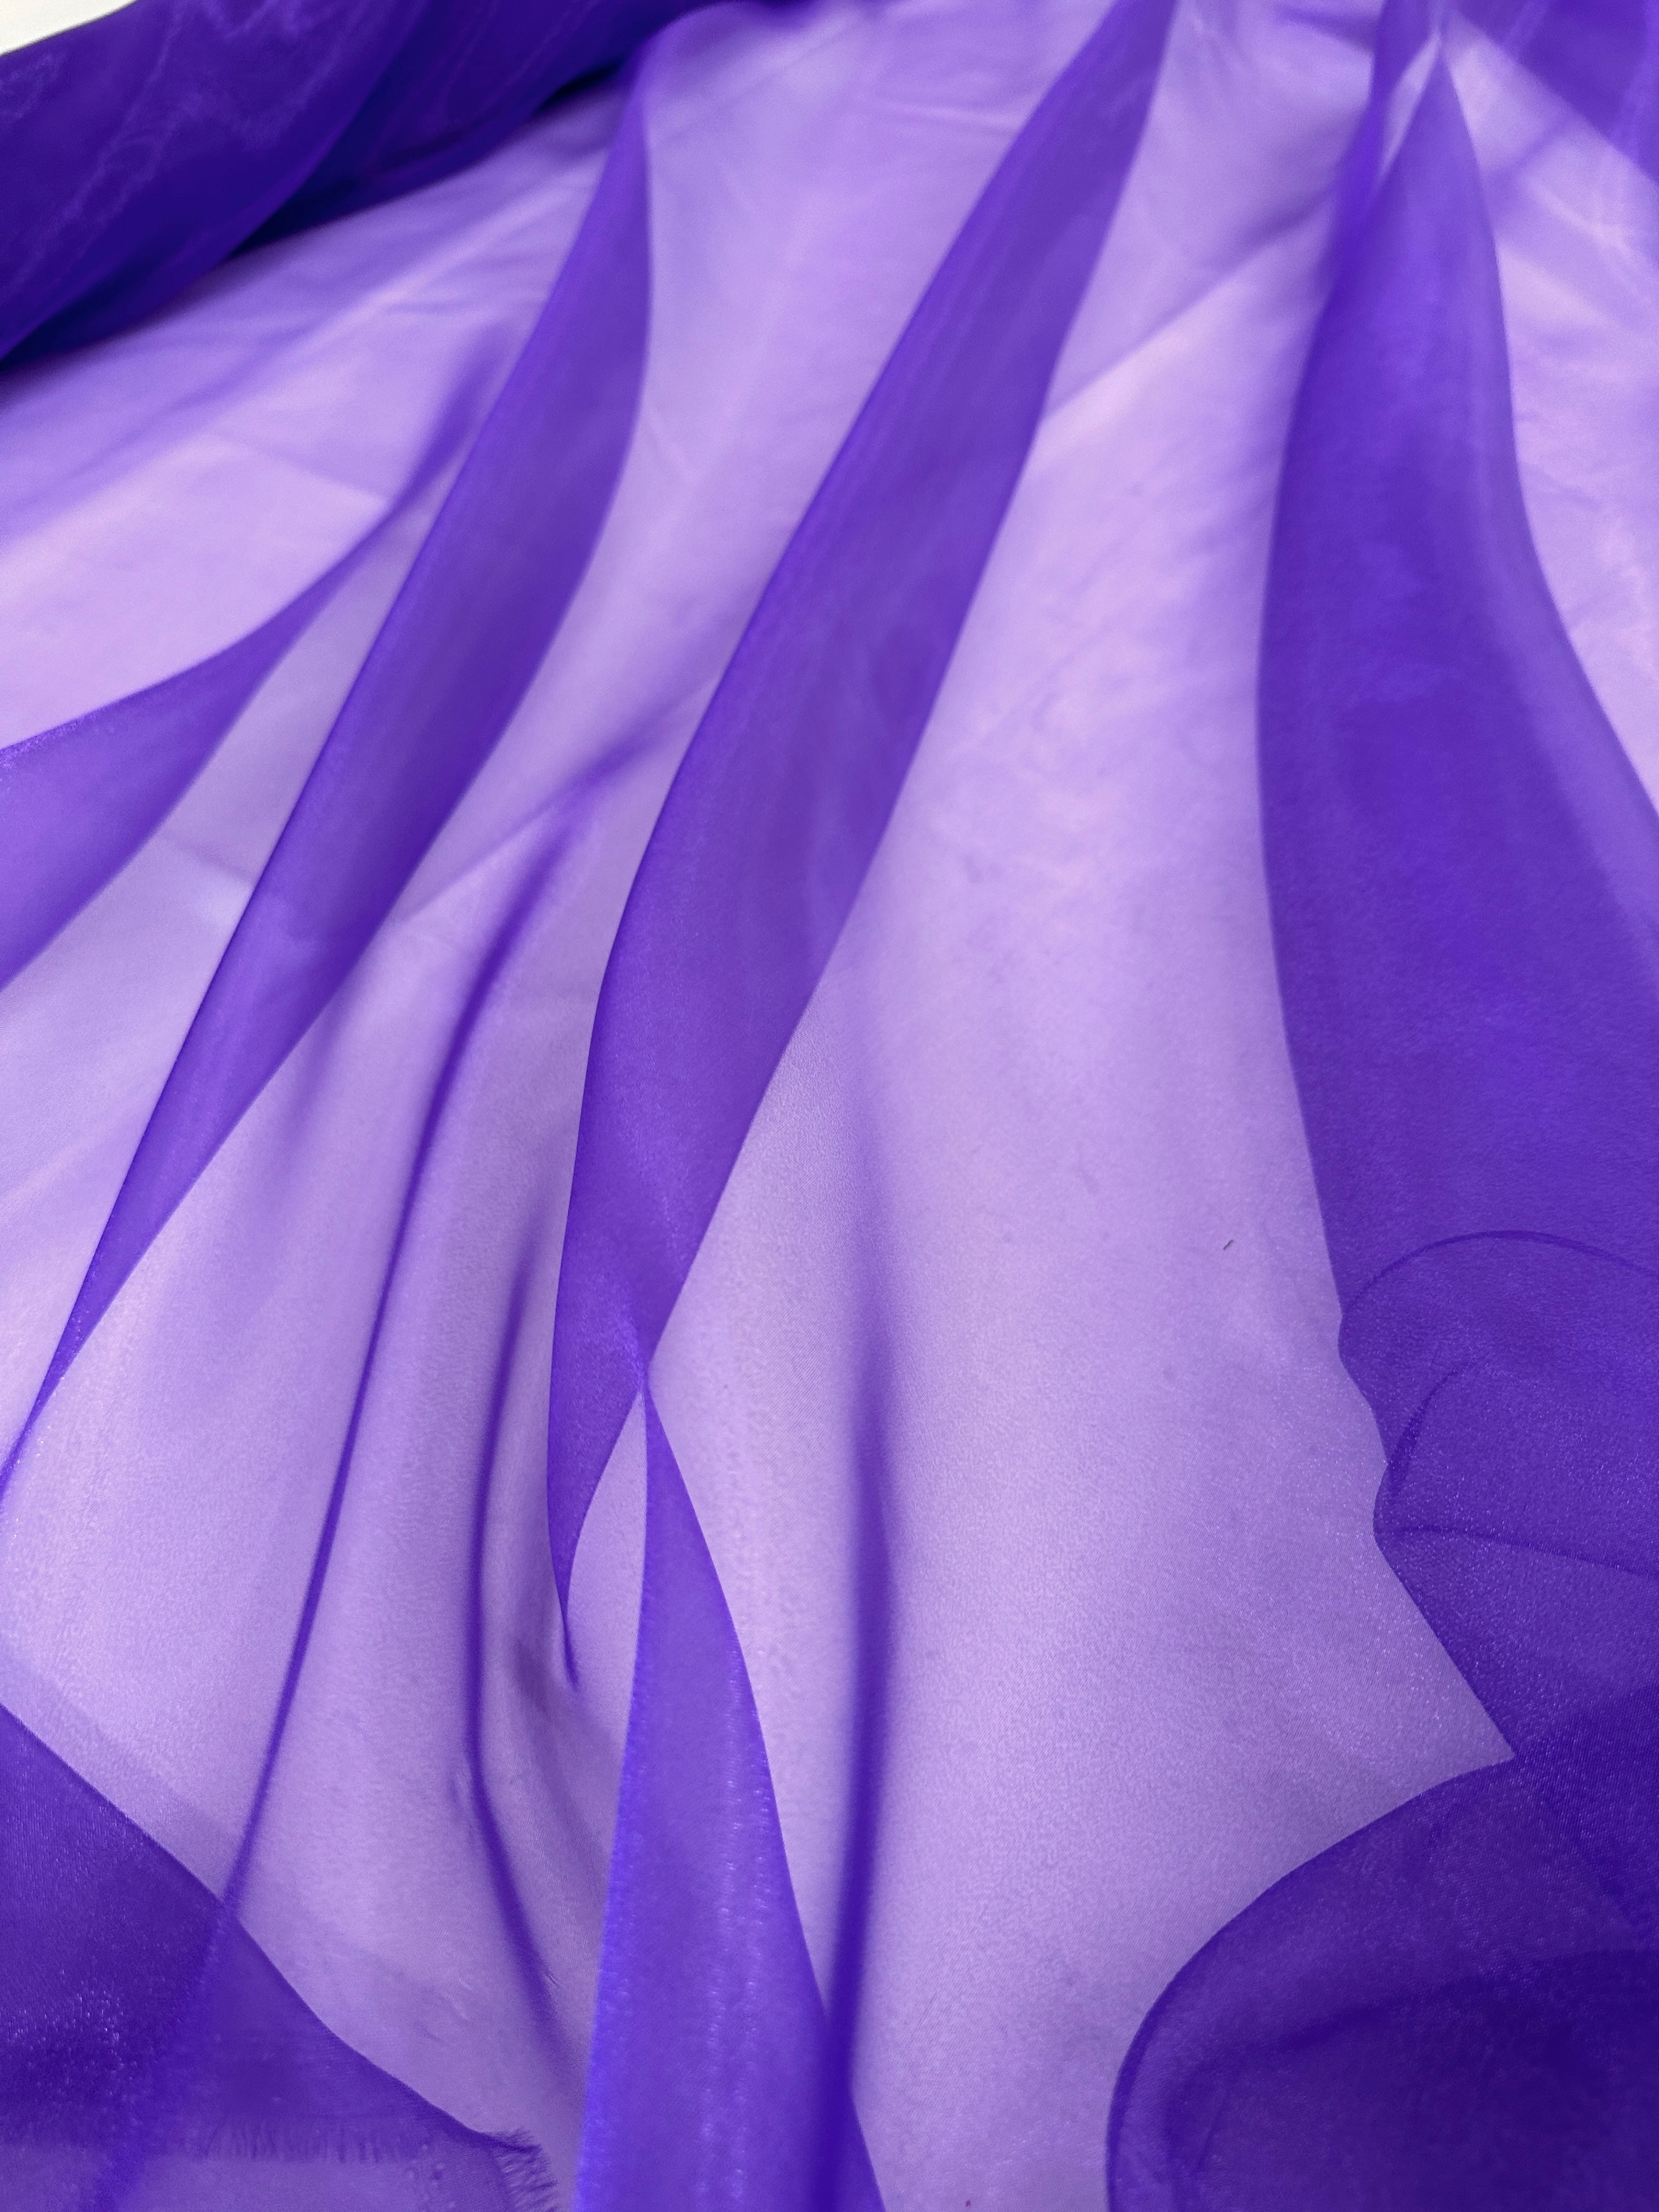  purple crystal chiffon, light purple crystal chiffon, lilac crystal chiffon, dark purple crystal chiffon, crystal chiffon for woman, chiffon for bride, premium chiffon, chiffon in low price, chiffon for party wear, chiffon for gown